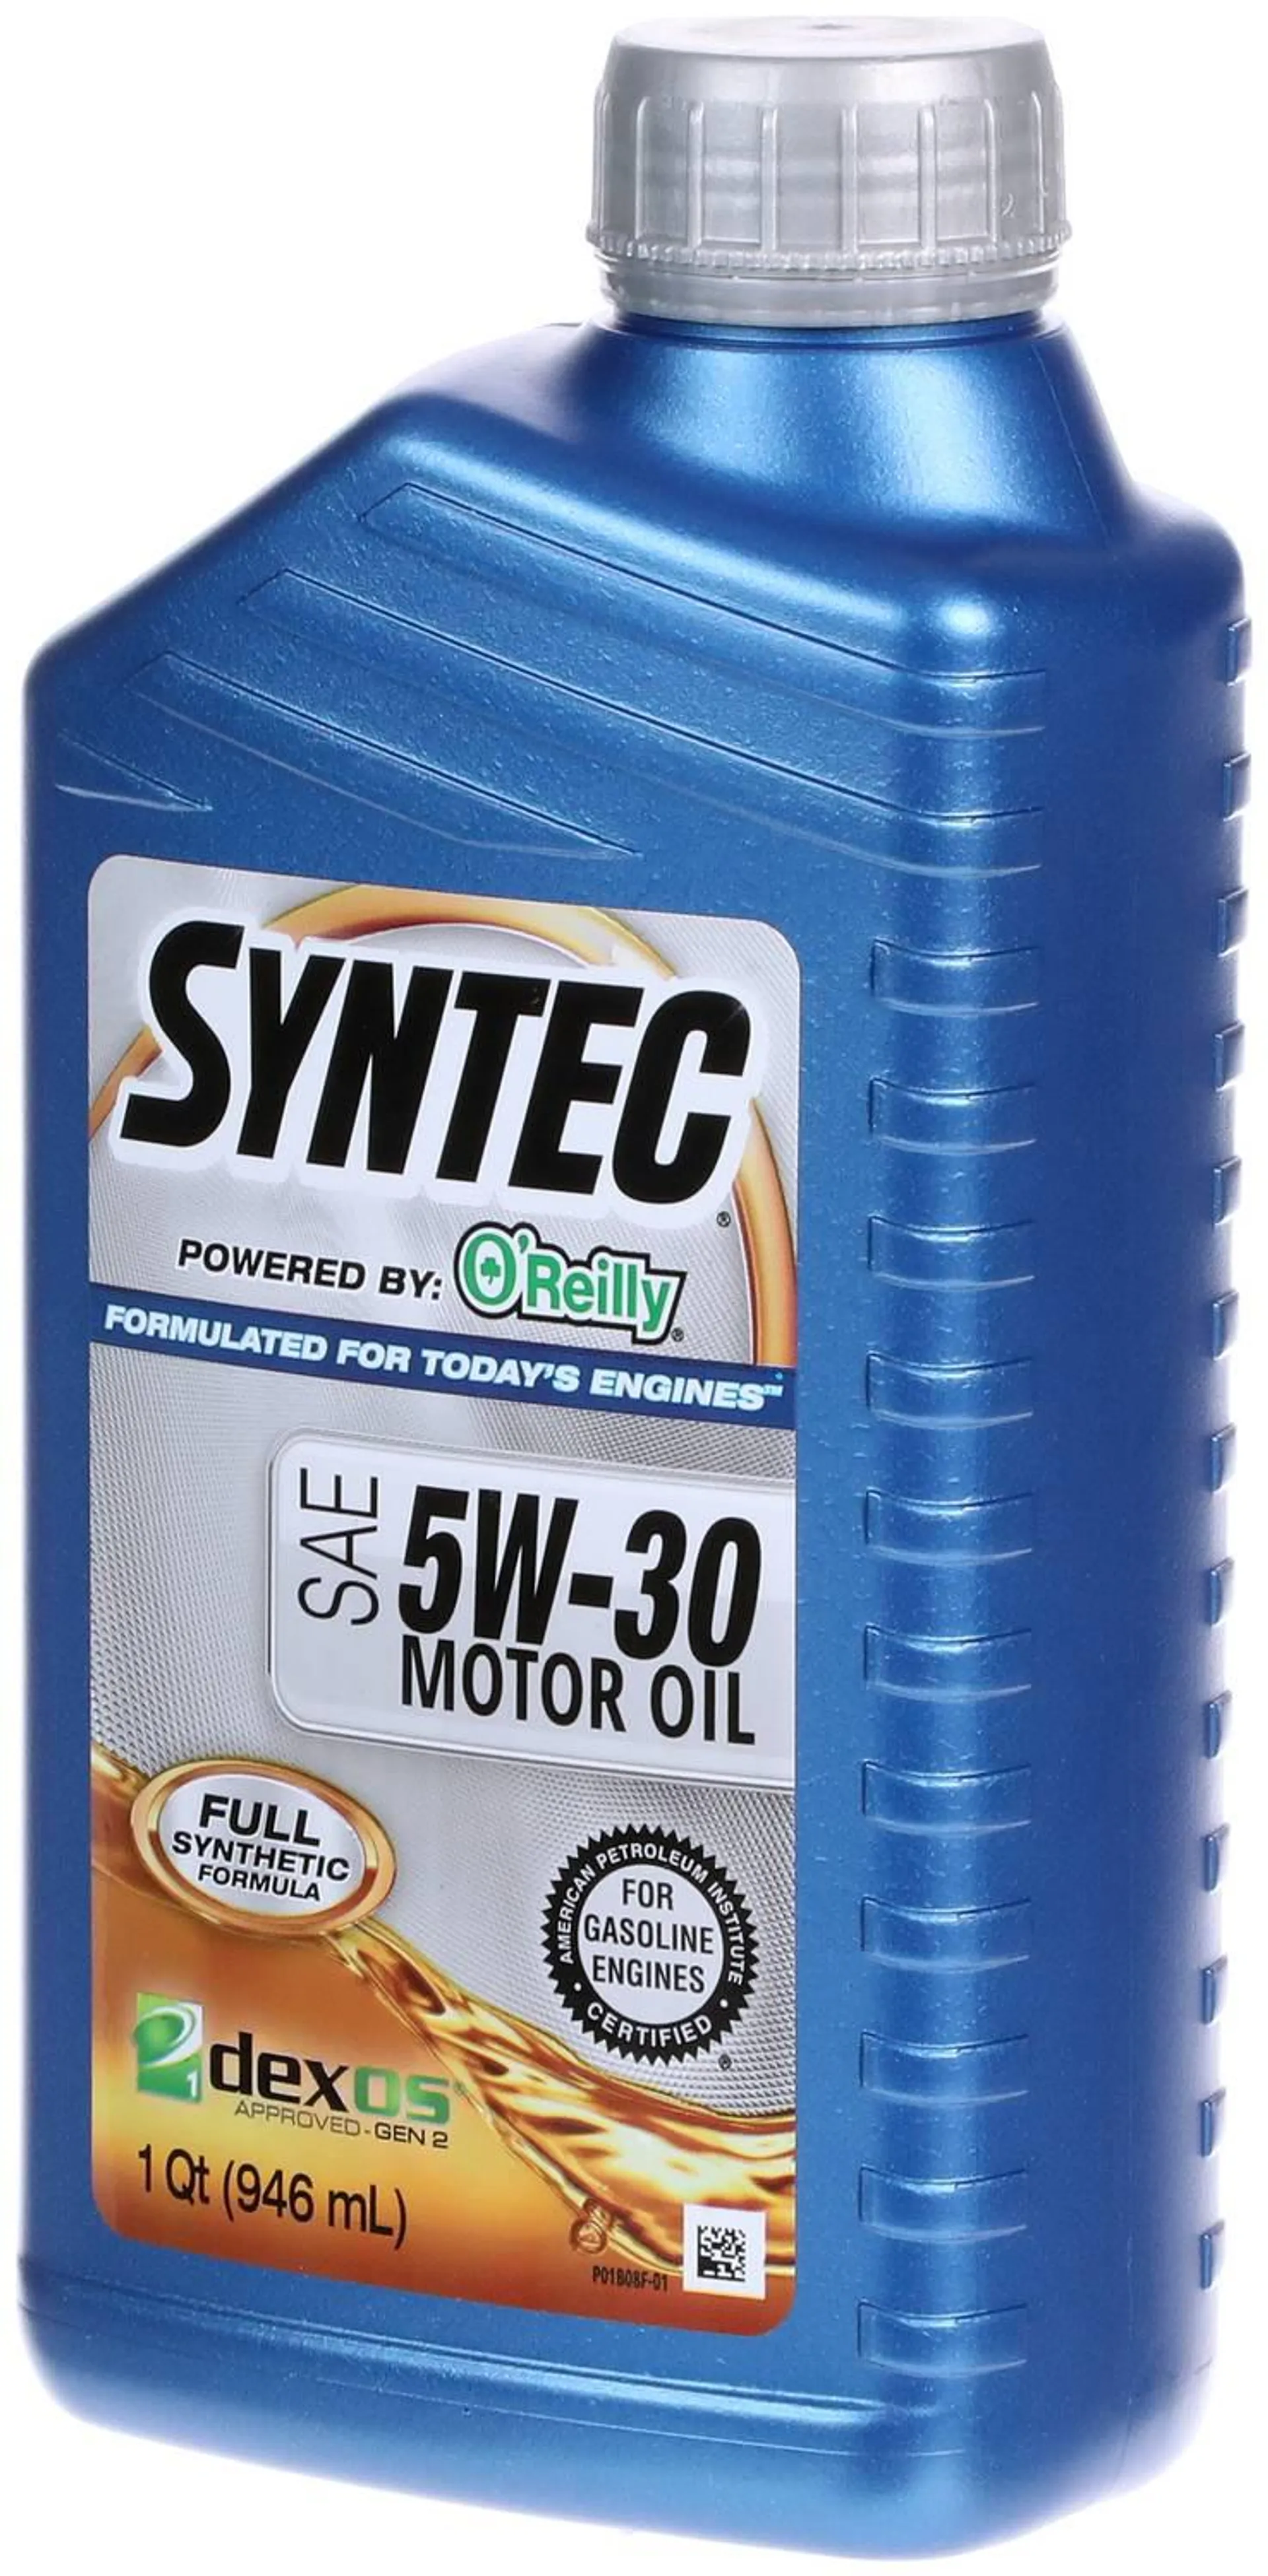 SYNTEC Full Synthetic Motor Oil 5W-30 1 Quart - SYN5-30